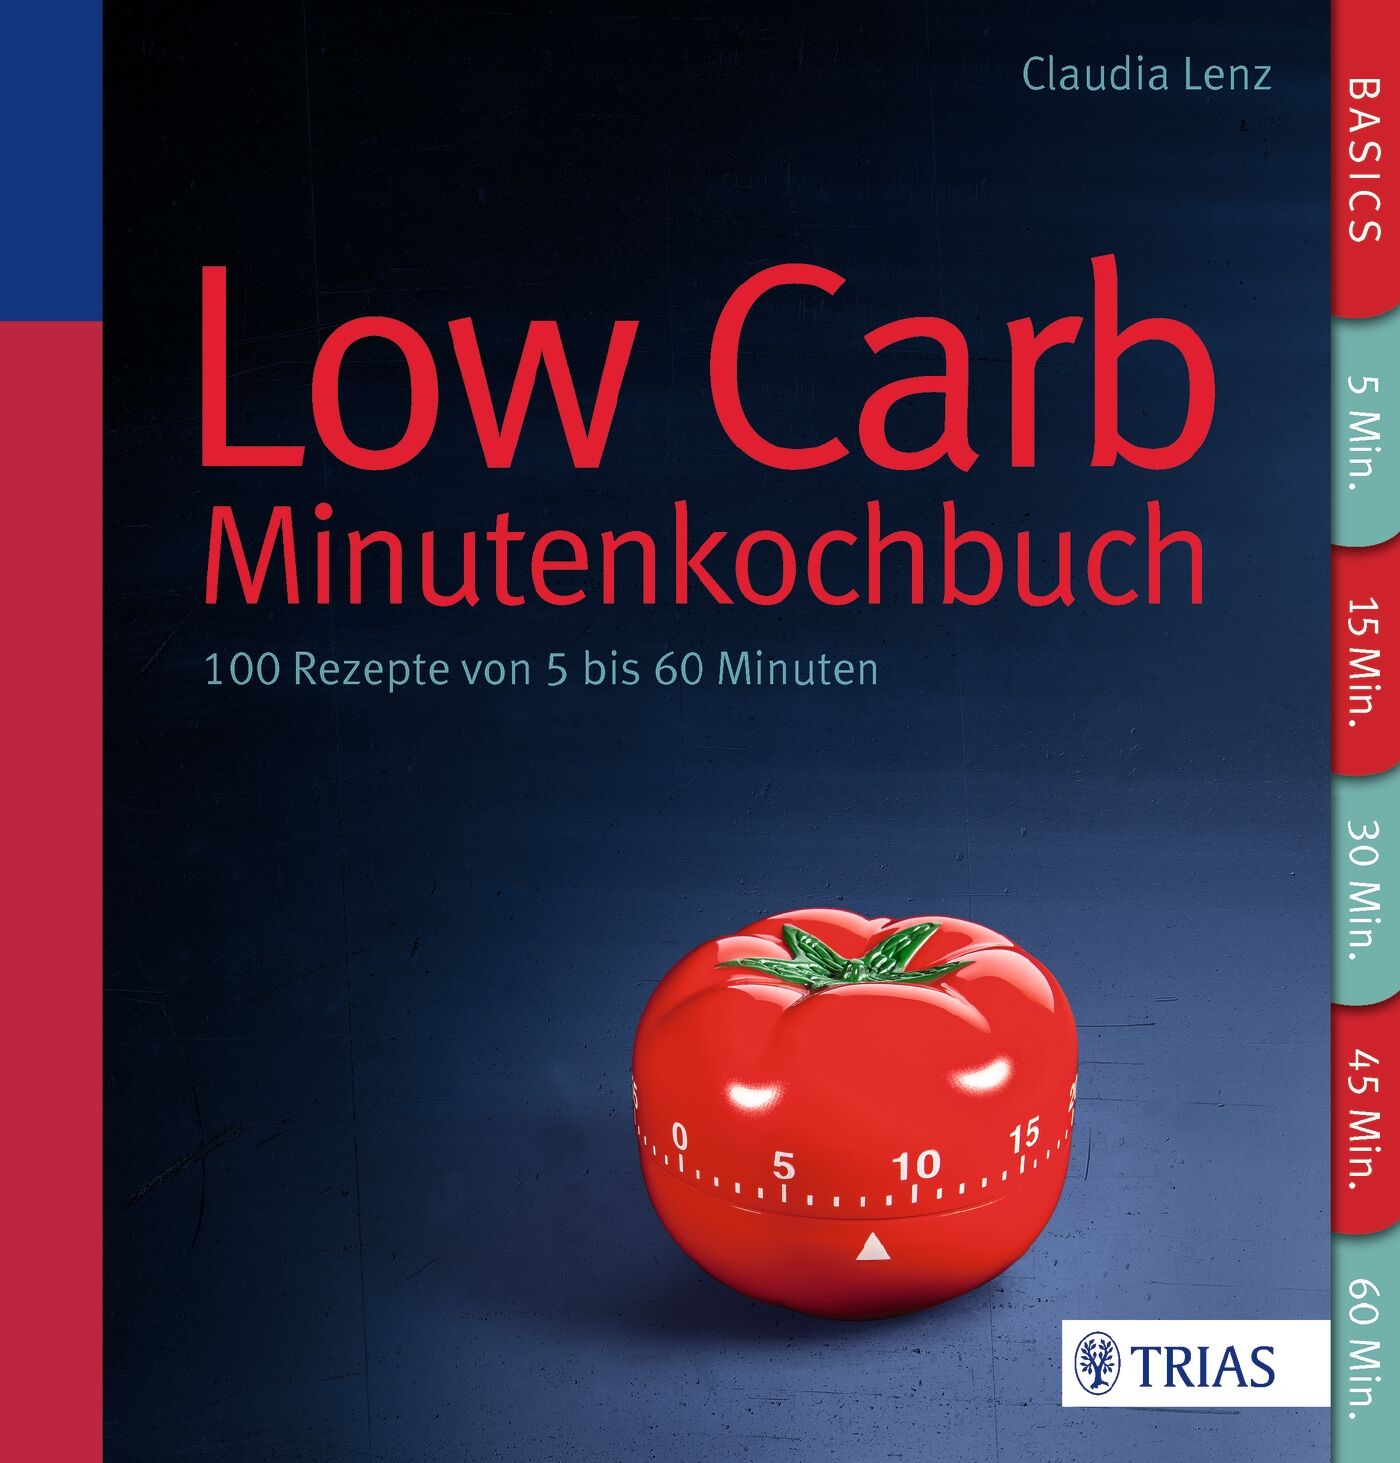 Low Carb - Minutenkochbuch, 9783830480020